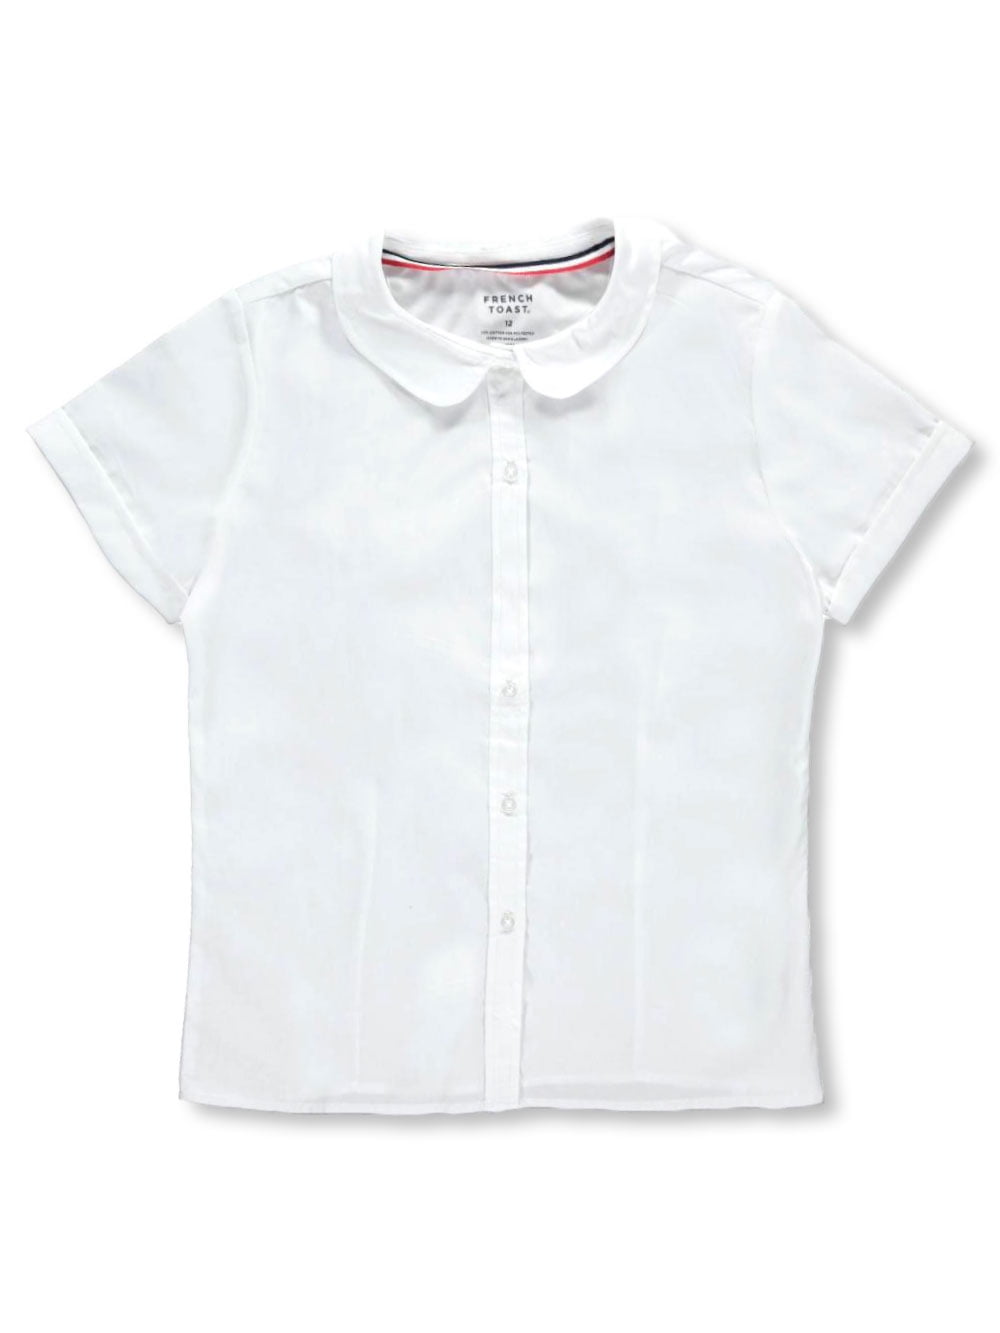 French Toast Toddler Short Sleeve Poplin Uniform Blue Button Up Shirt Sz 3T 